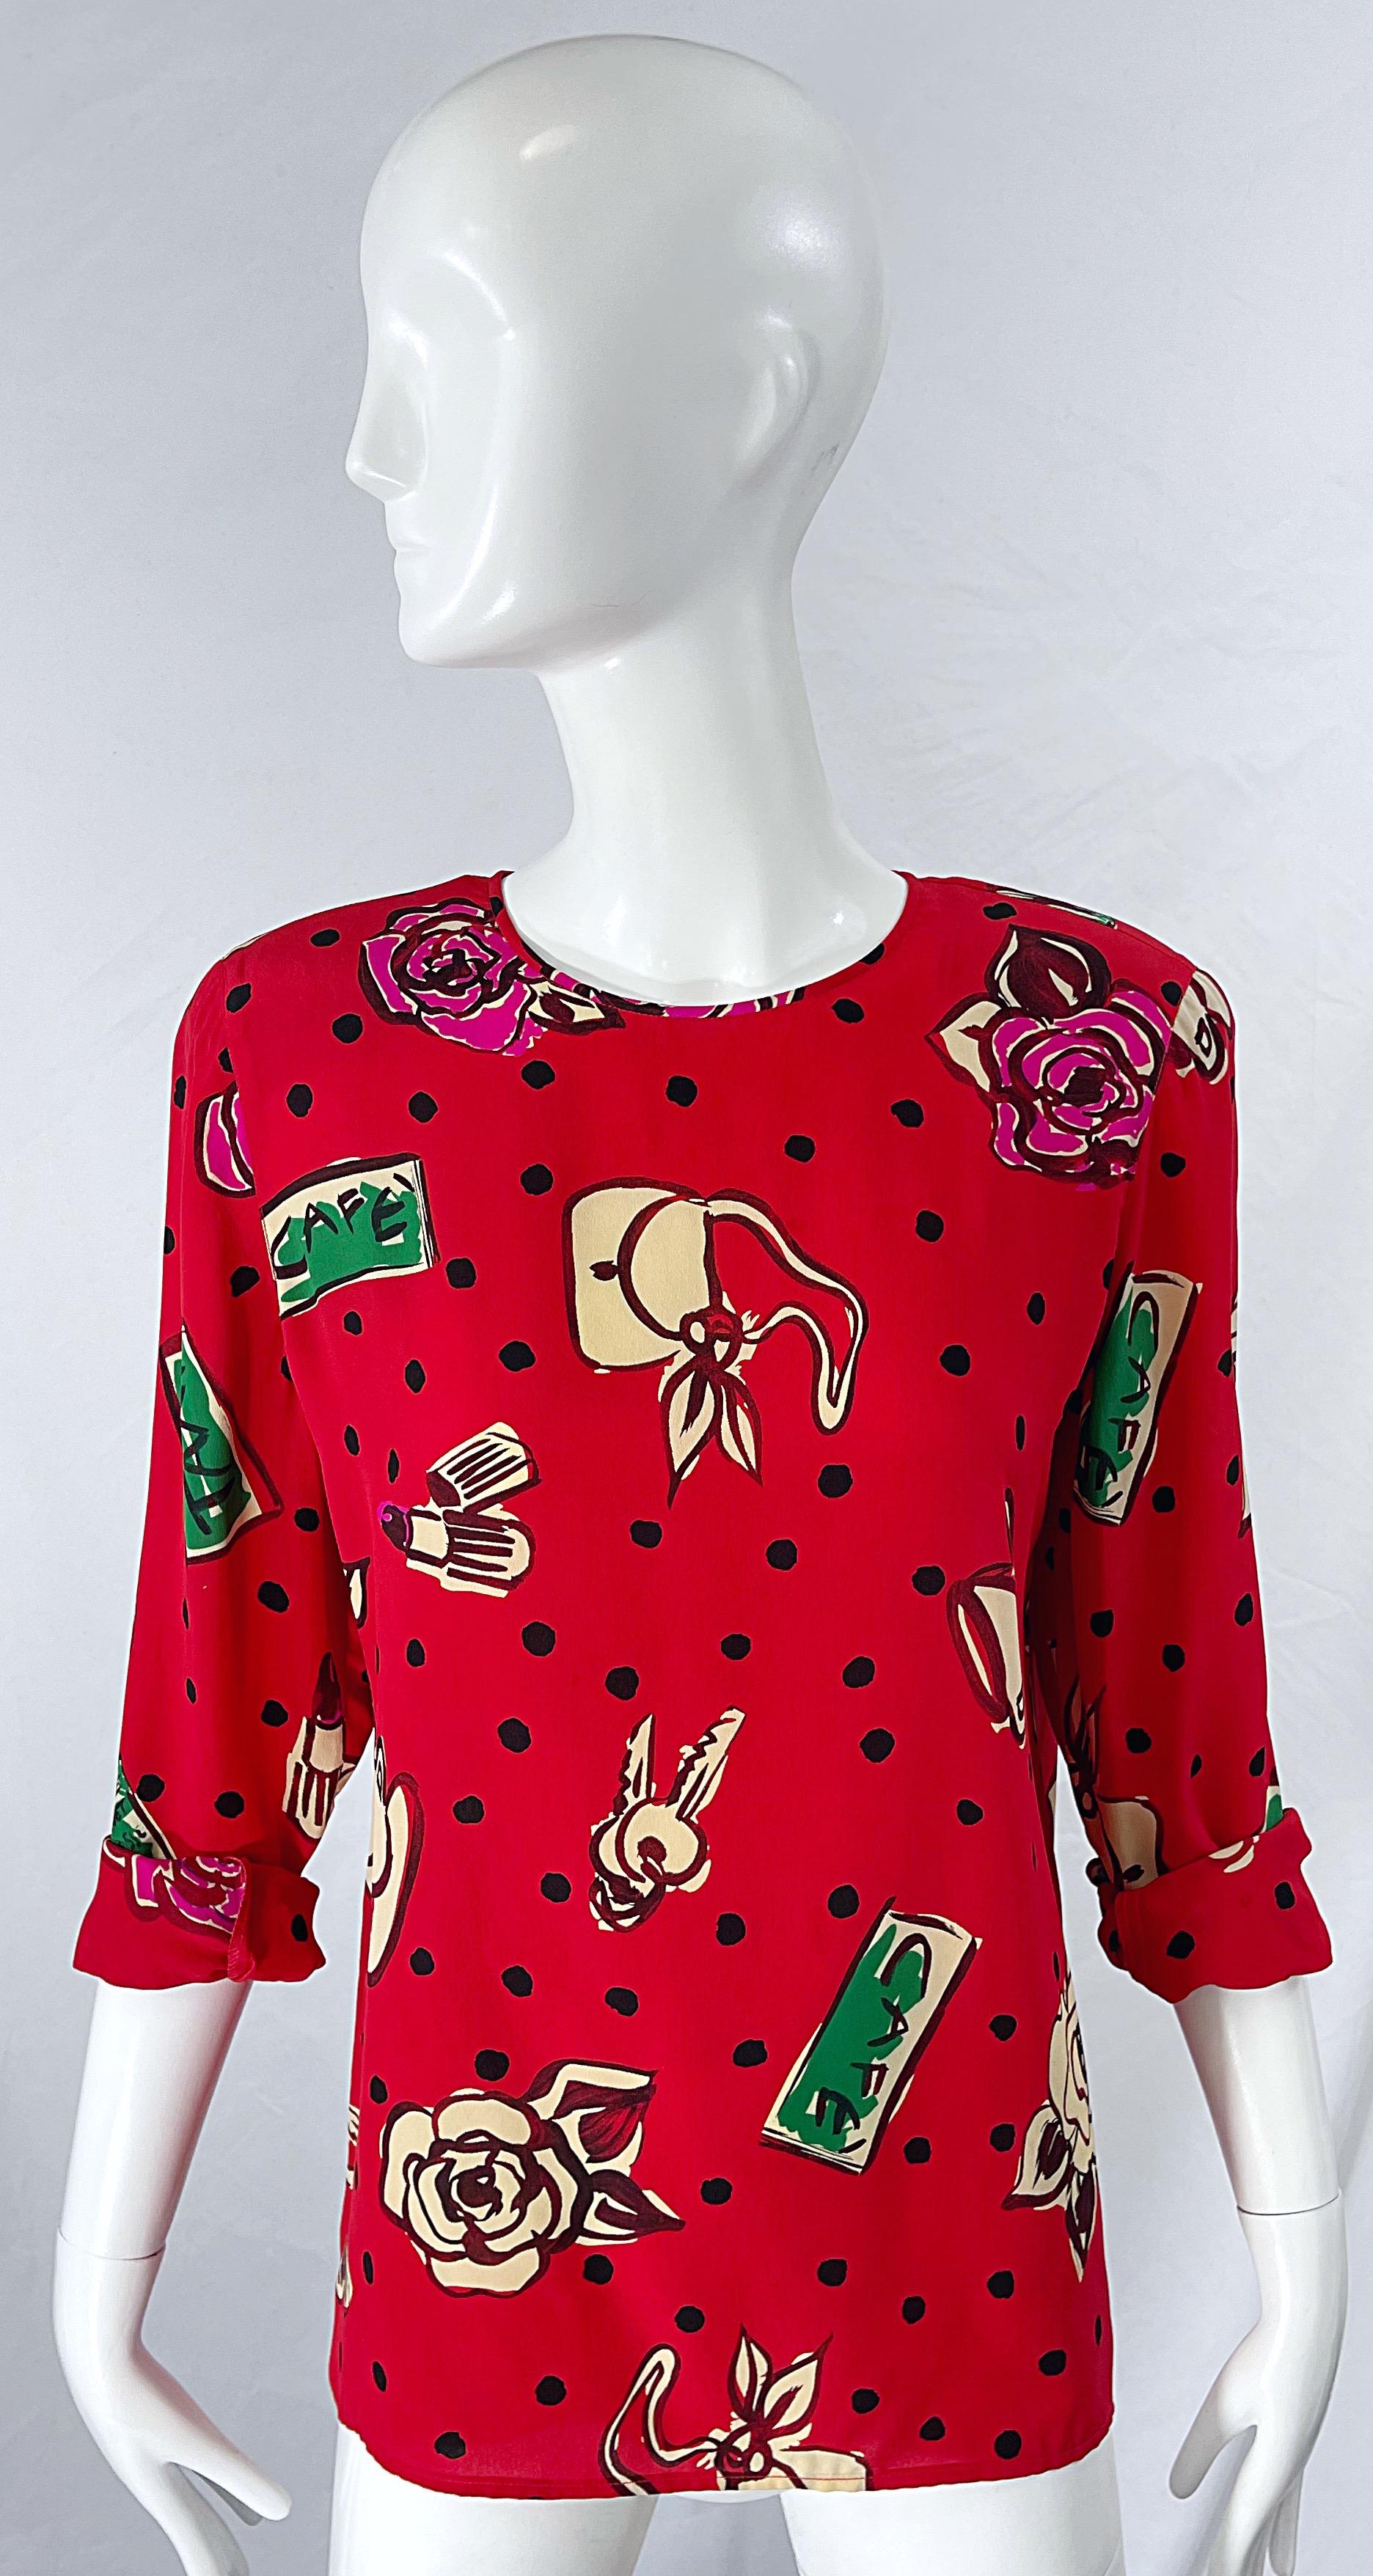 Emanuel Ungaro 1990s Size 10 Red Novelty Print Silk Vintage 90s Blouse Shirt Top For Sale 7